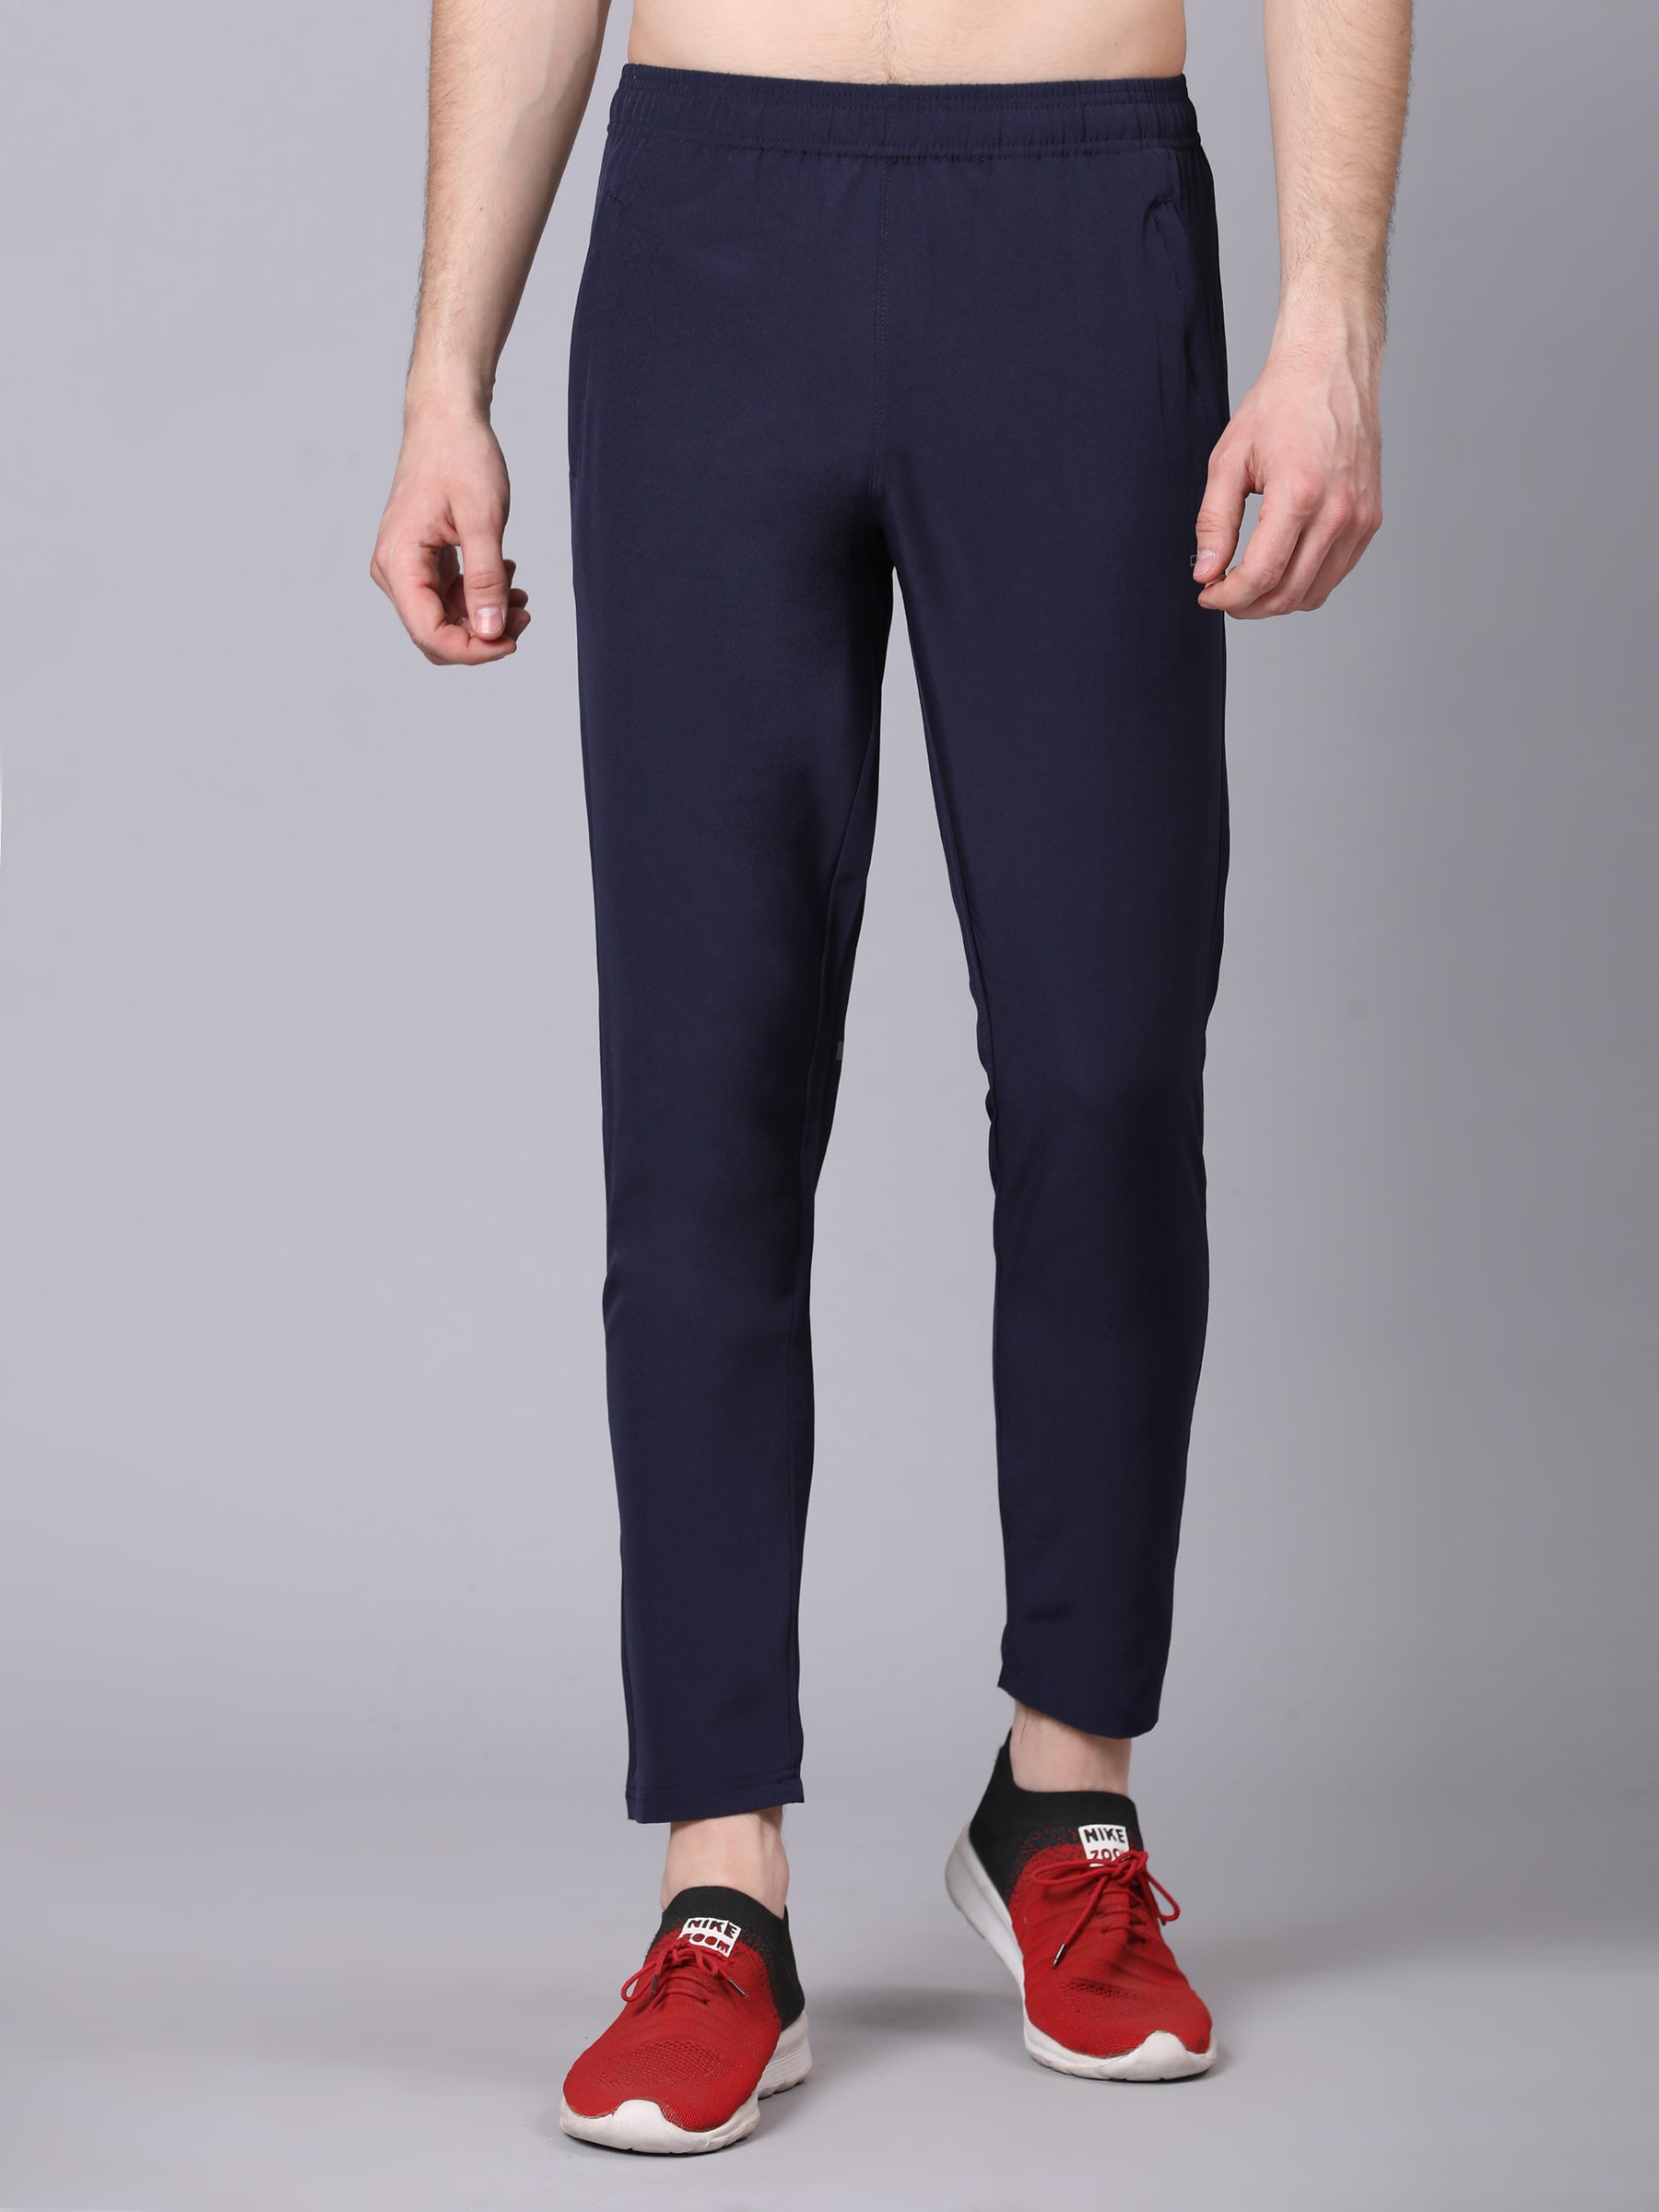 bnf premium mens track pants||comfortablr||joggers||  gymwear||sportswear||ACTIVE WEAR